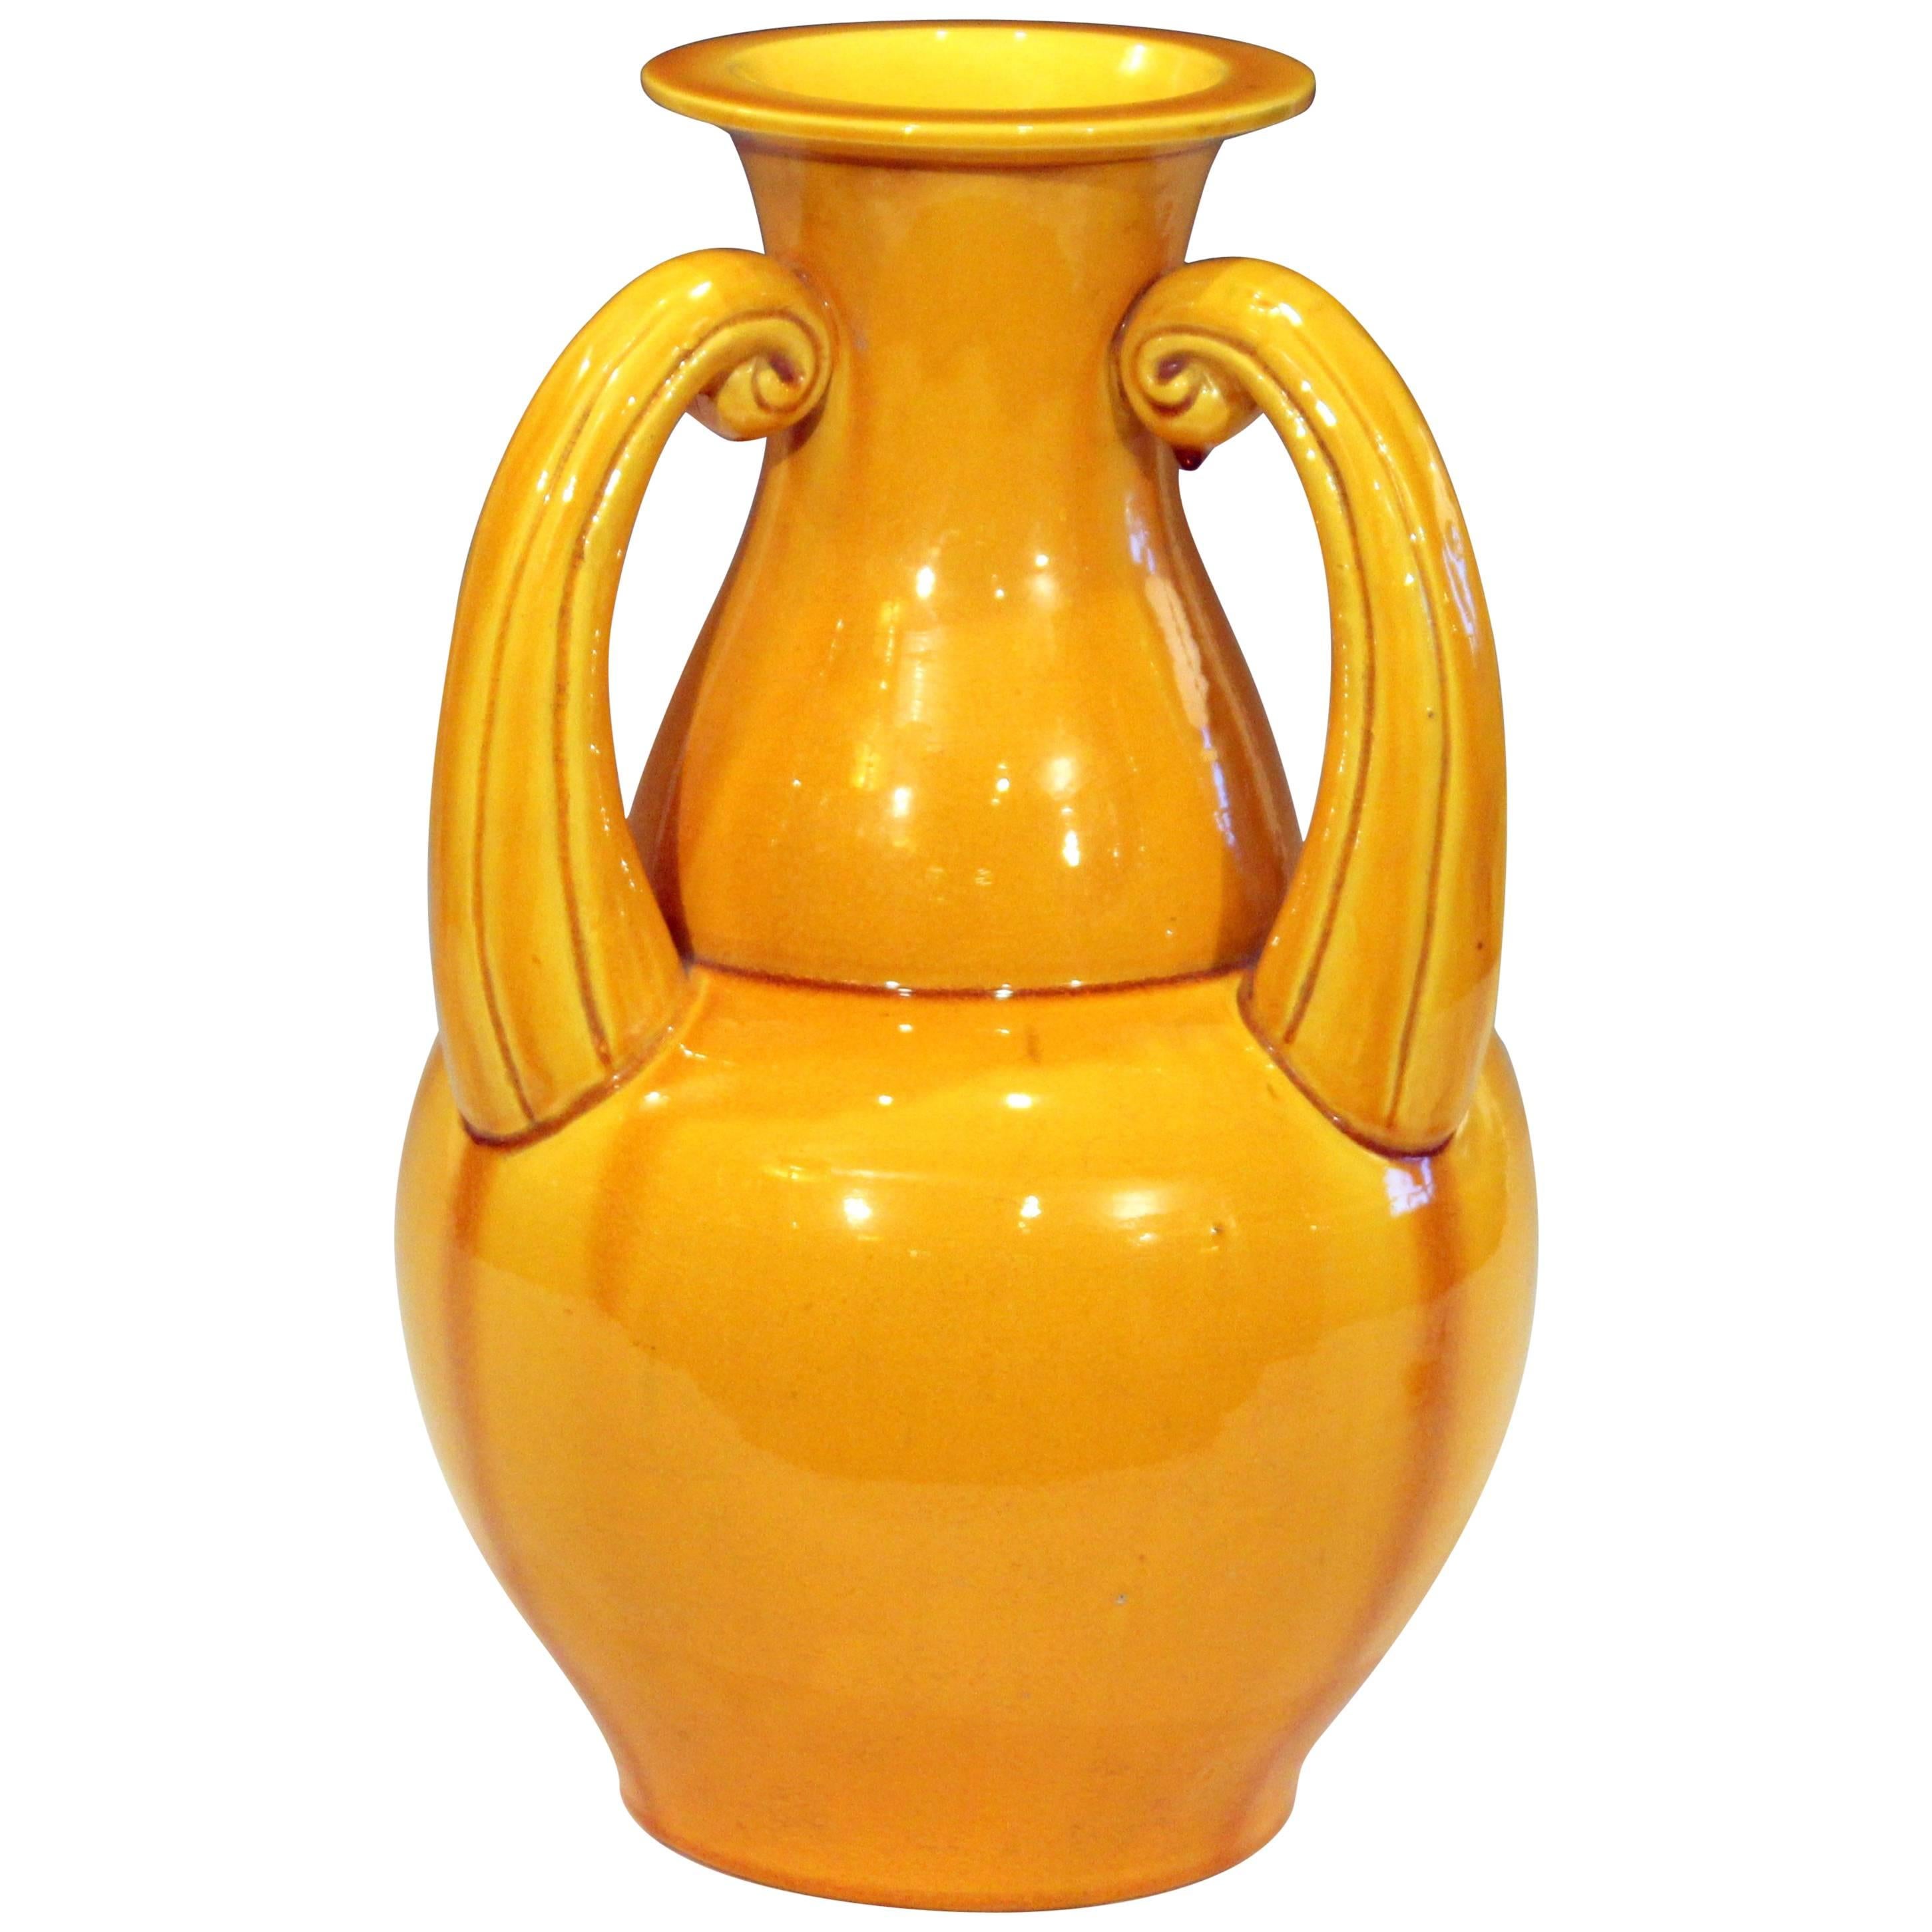 Awaji Pottery Vintage Japanese Studio Yellow Crackle Glaze Organic Gourd Vase